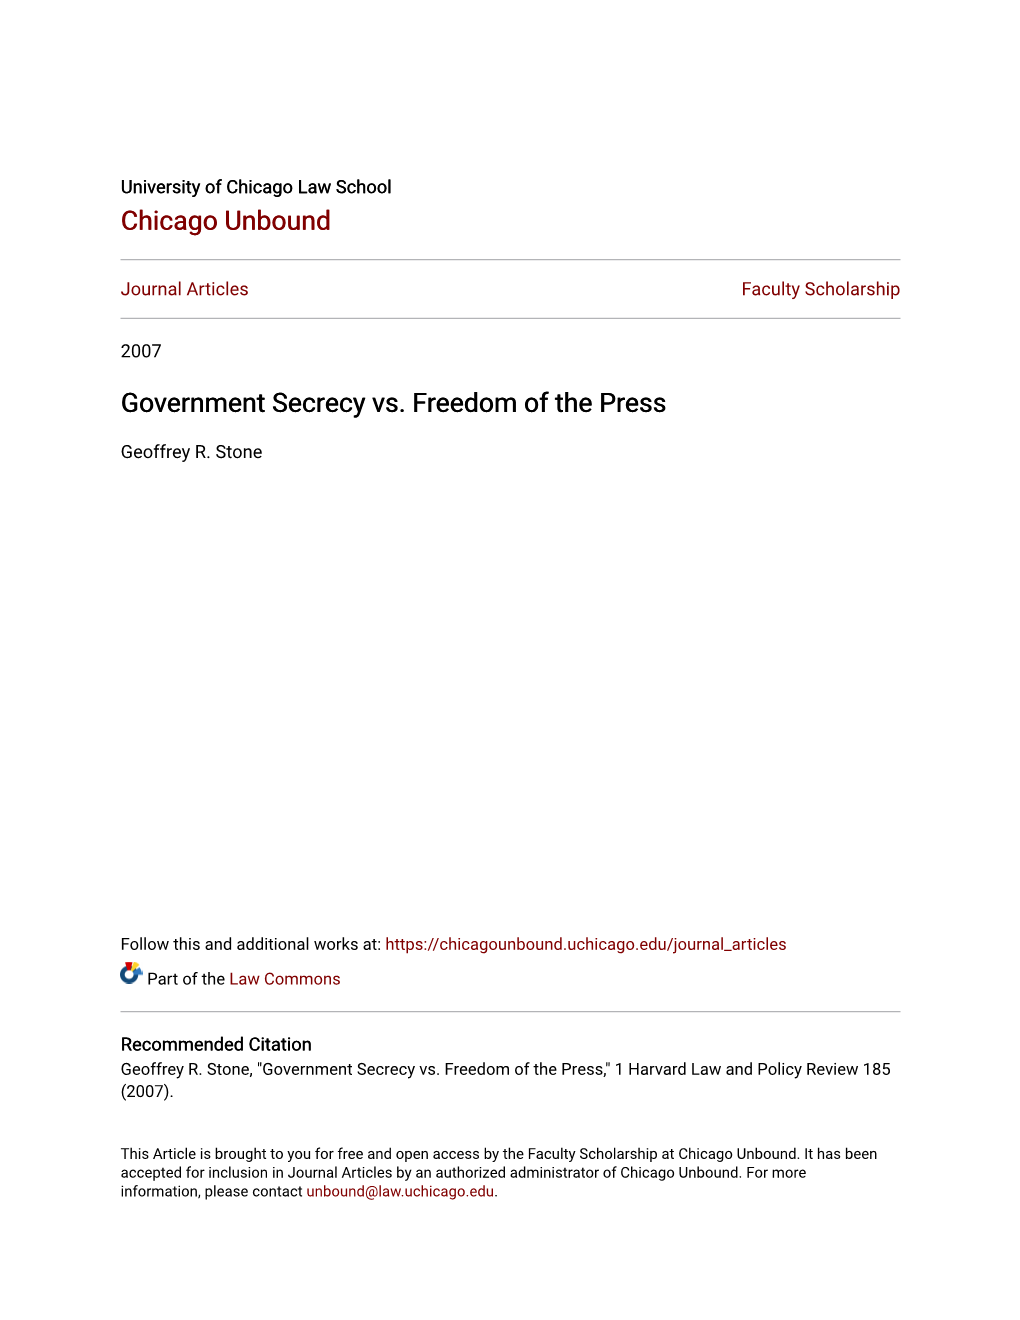 Government Secrecy Vs. Freedom of the Press